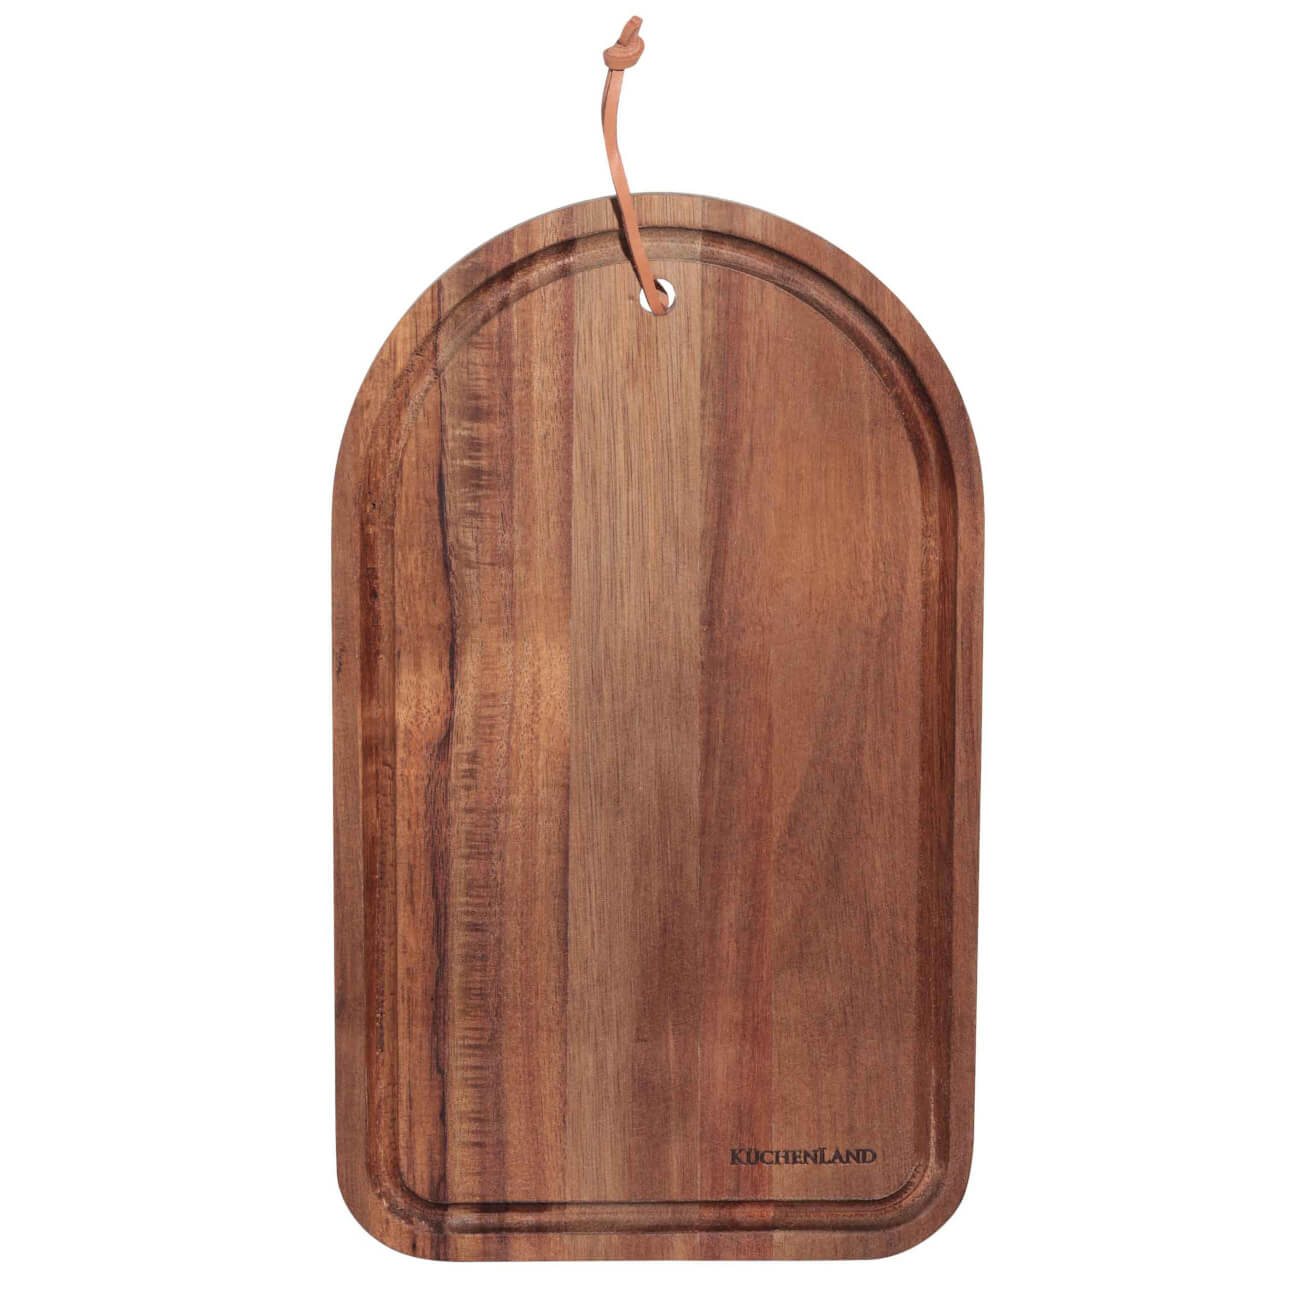 Cutting board, 30x18 cm, wood, Noble tree изображение № 1